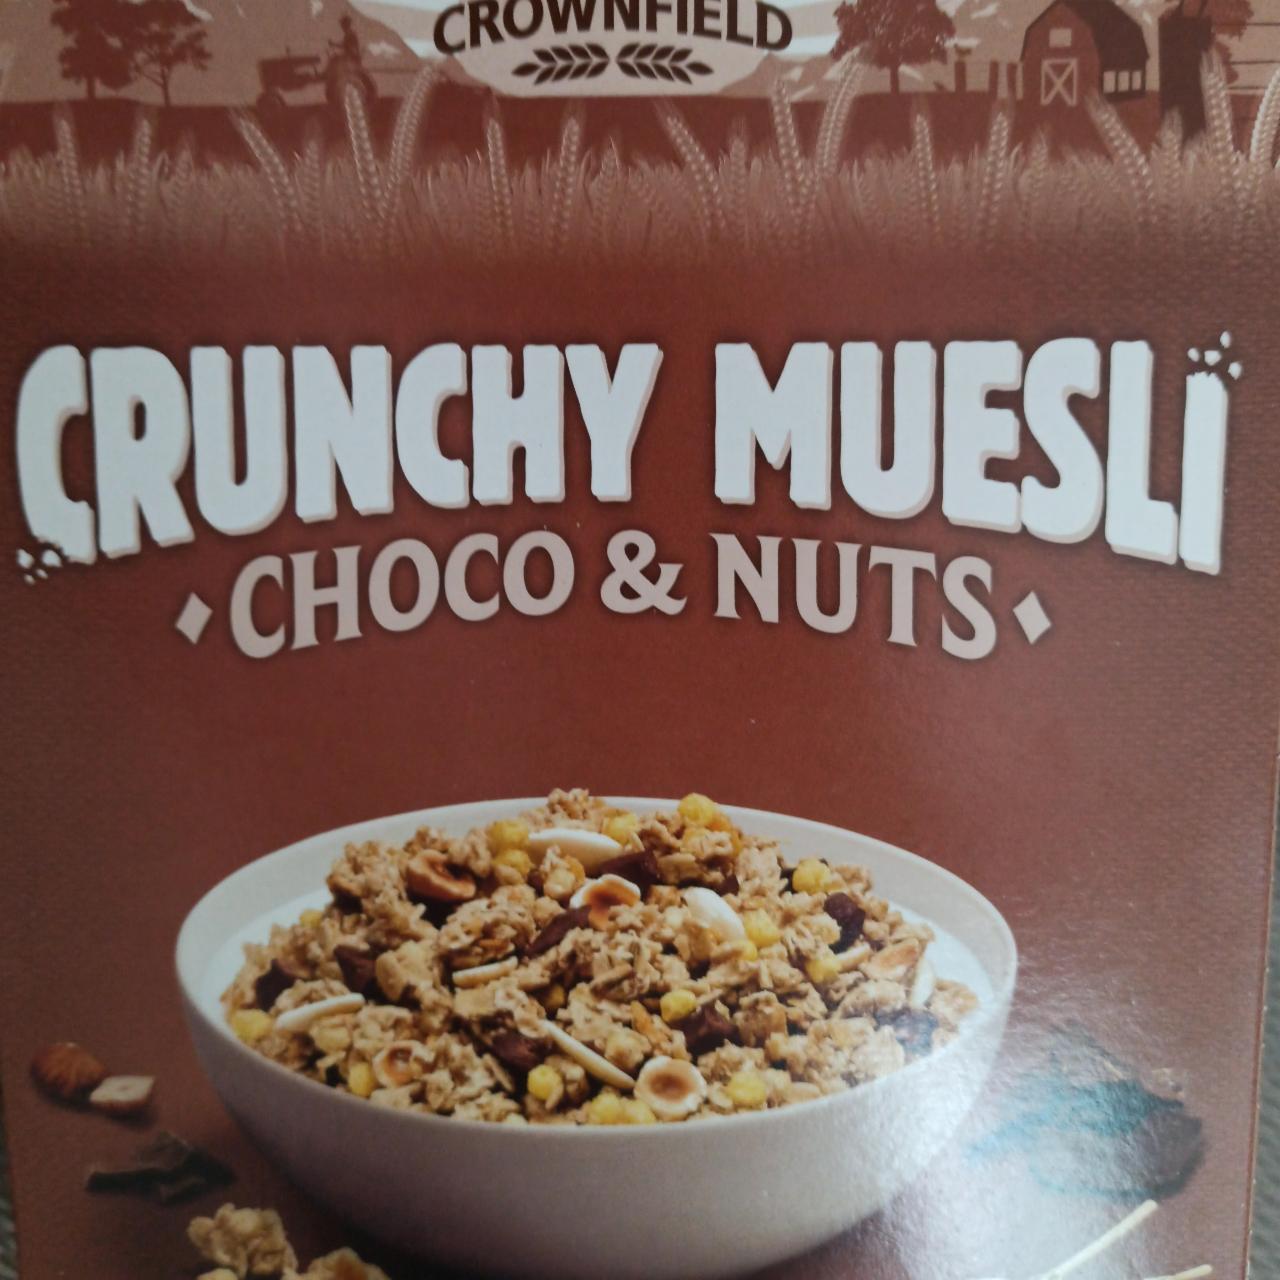 Fotografie - Crunchy Muesli Choco & Nuts Crownfield